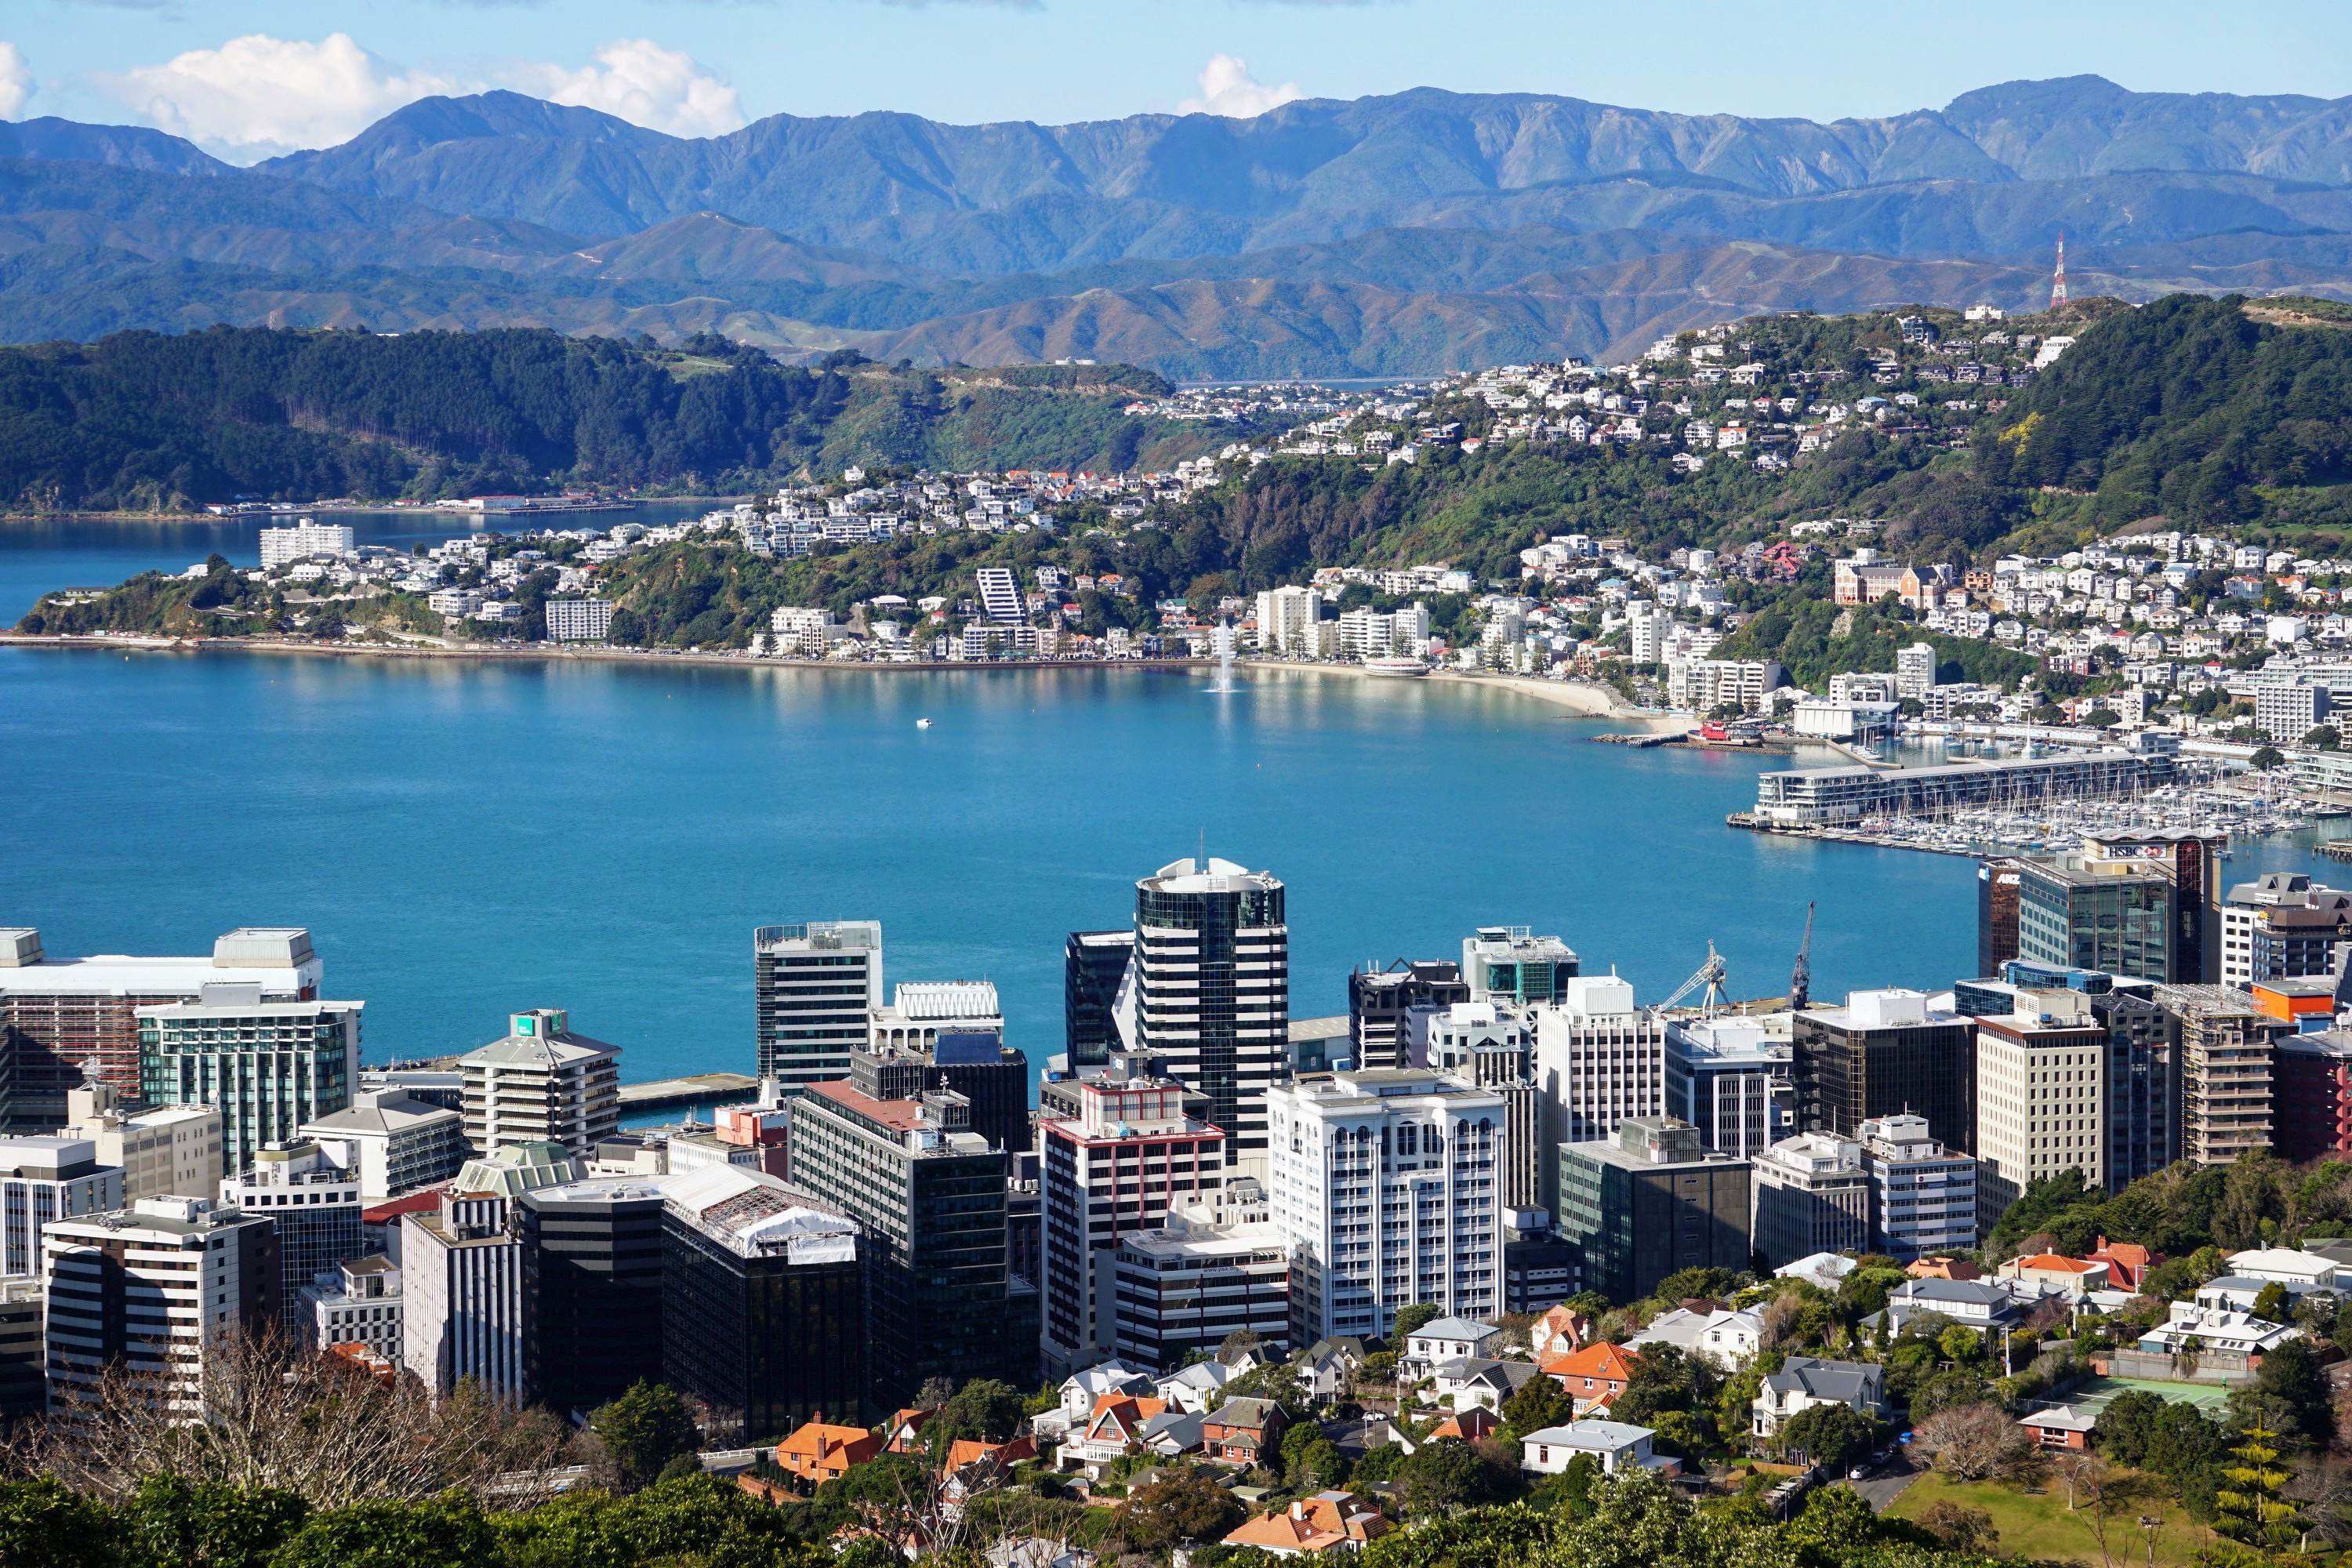 New Zealand cities ranked